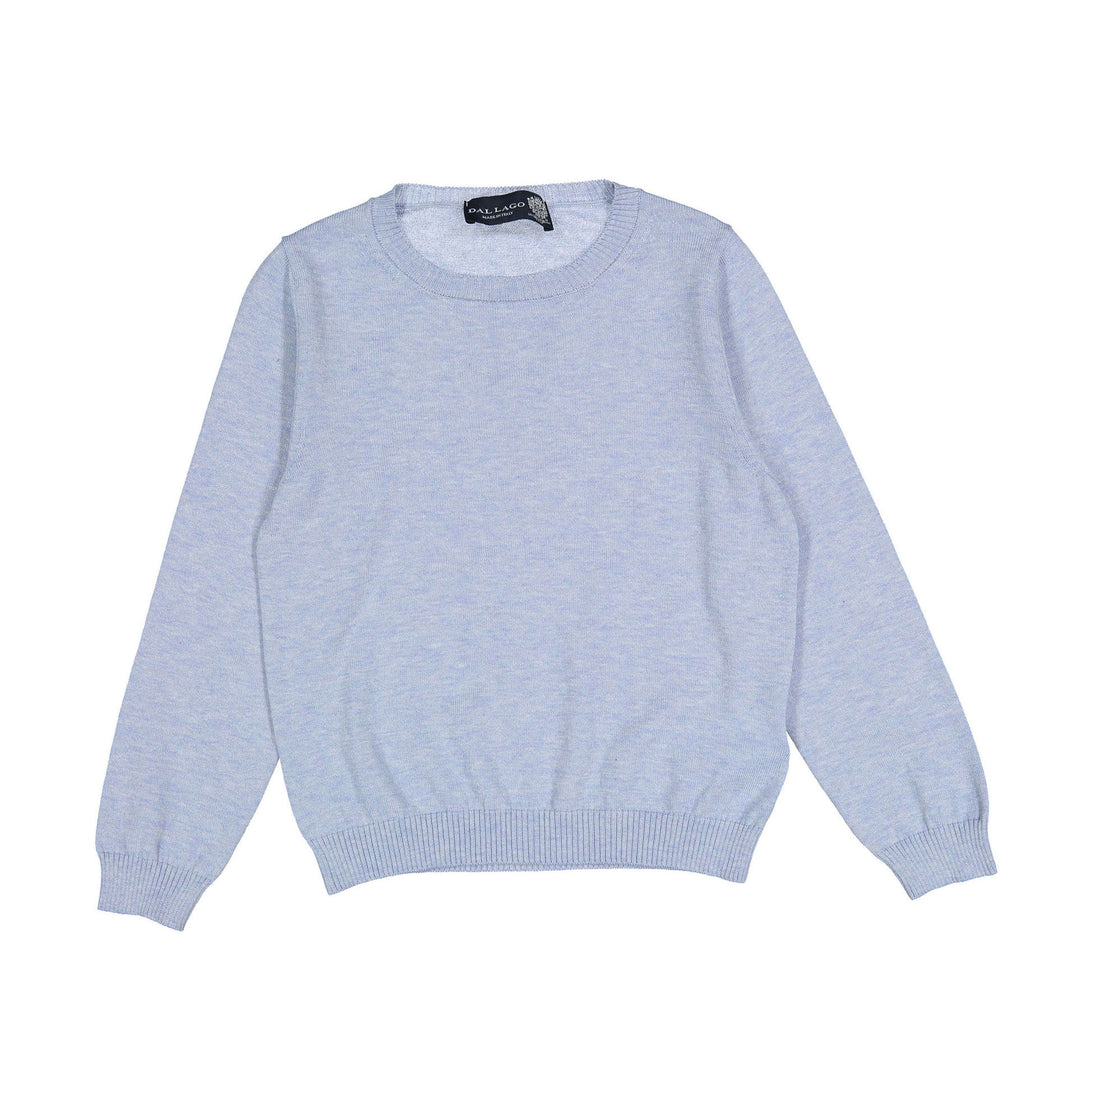 Dal Lago Lght Blue Percy Sweater